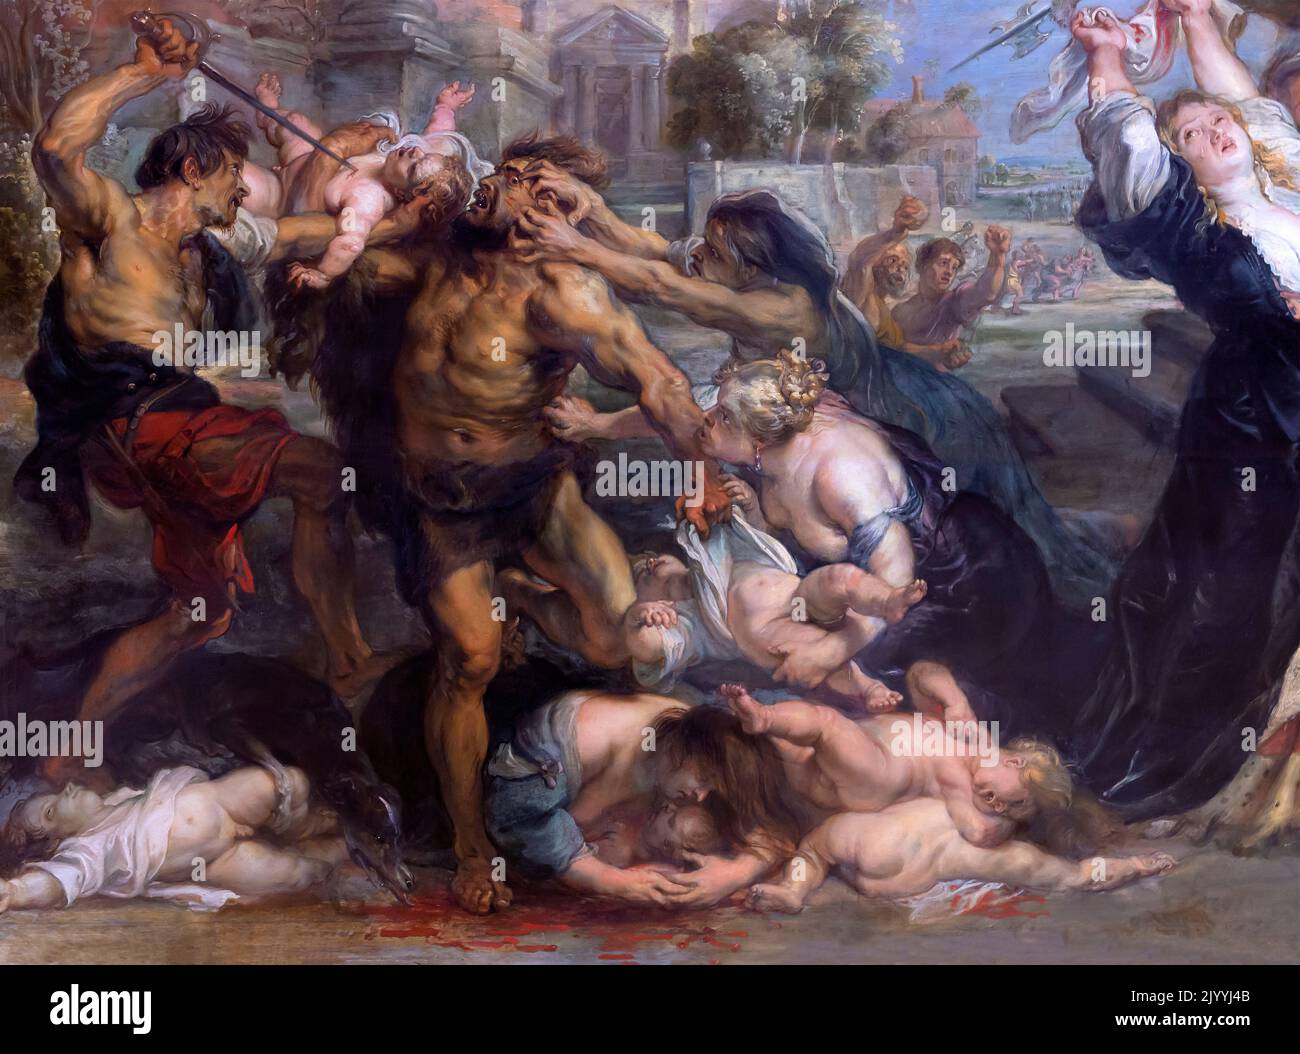 La masacre de los inocentes, Peter Paul Rubens, detalle, 1638, Alte Pinakothek, Múnich, Alemania, Europa Foto de stock